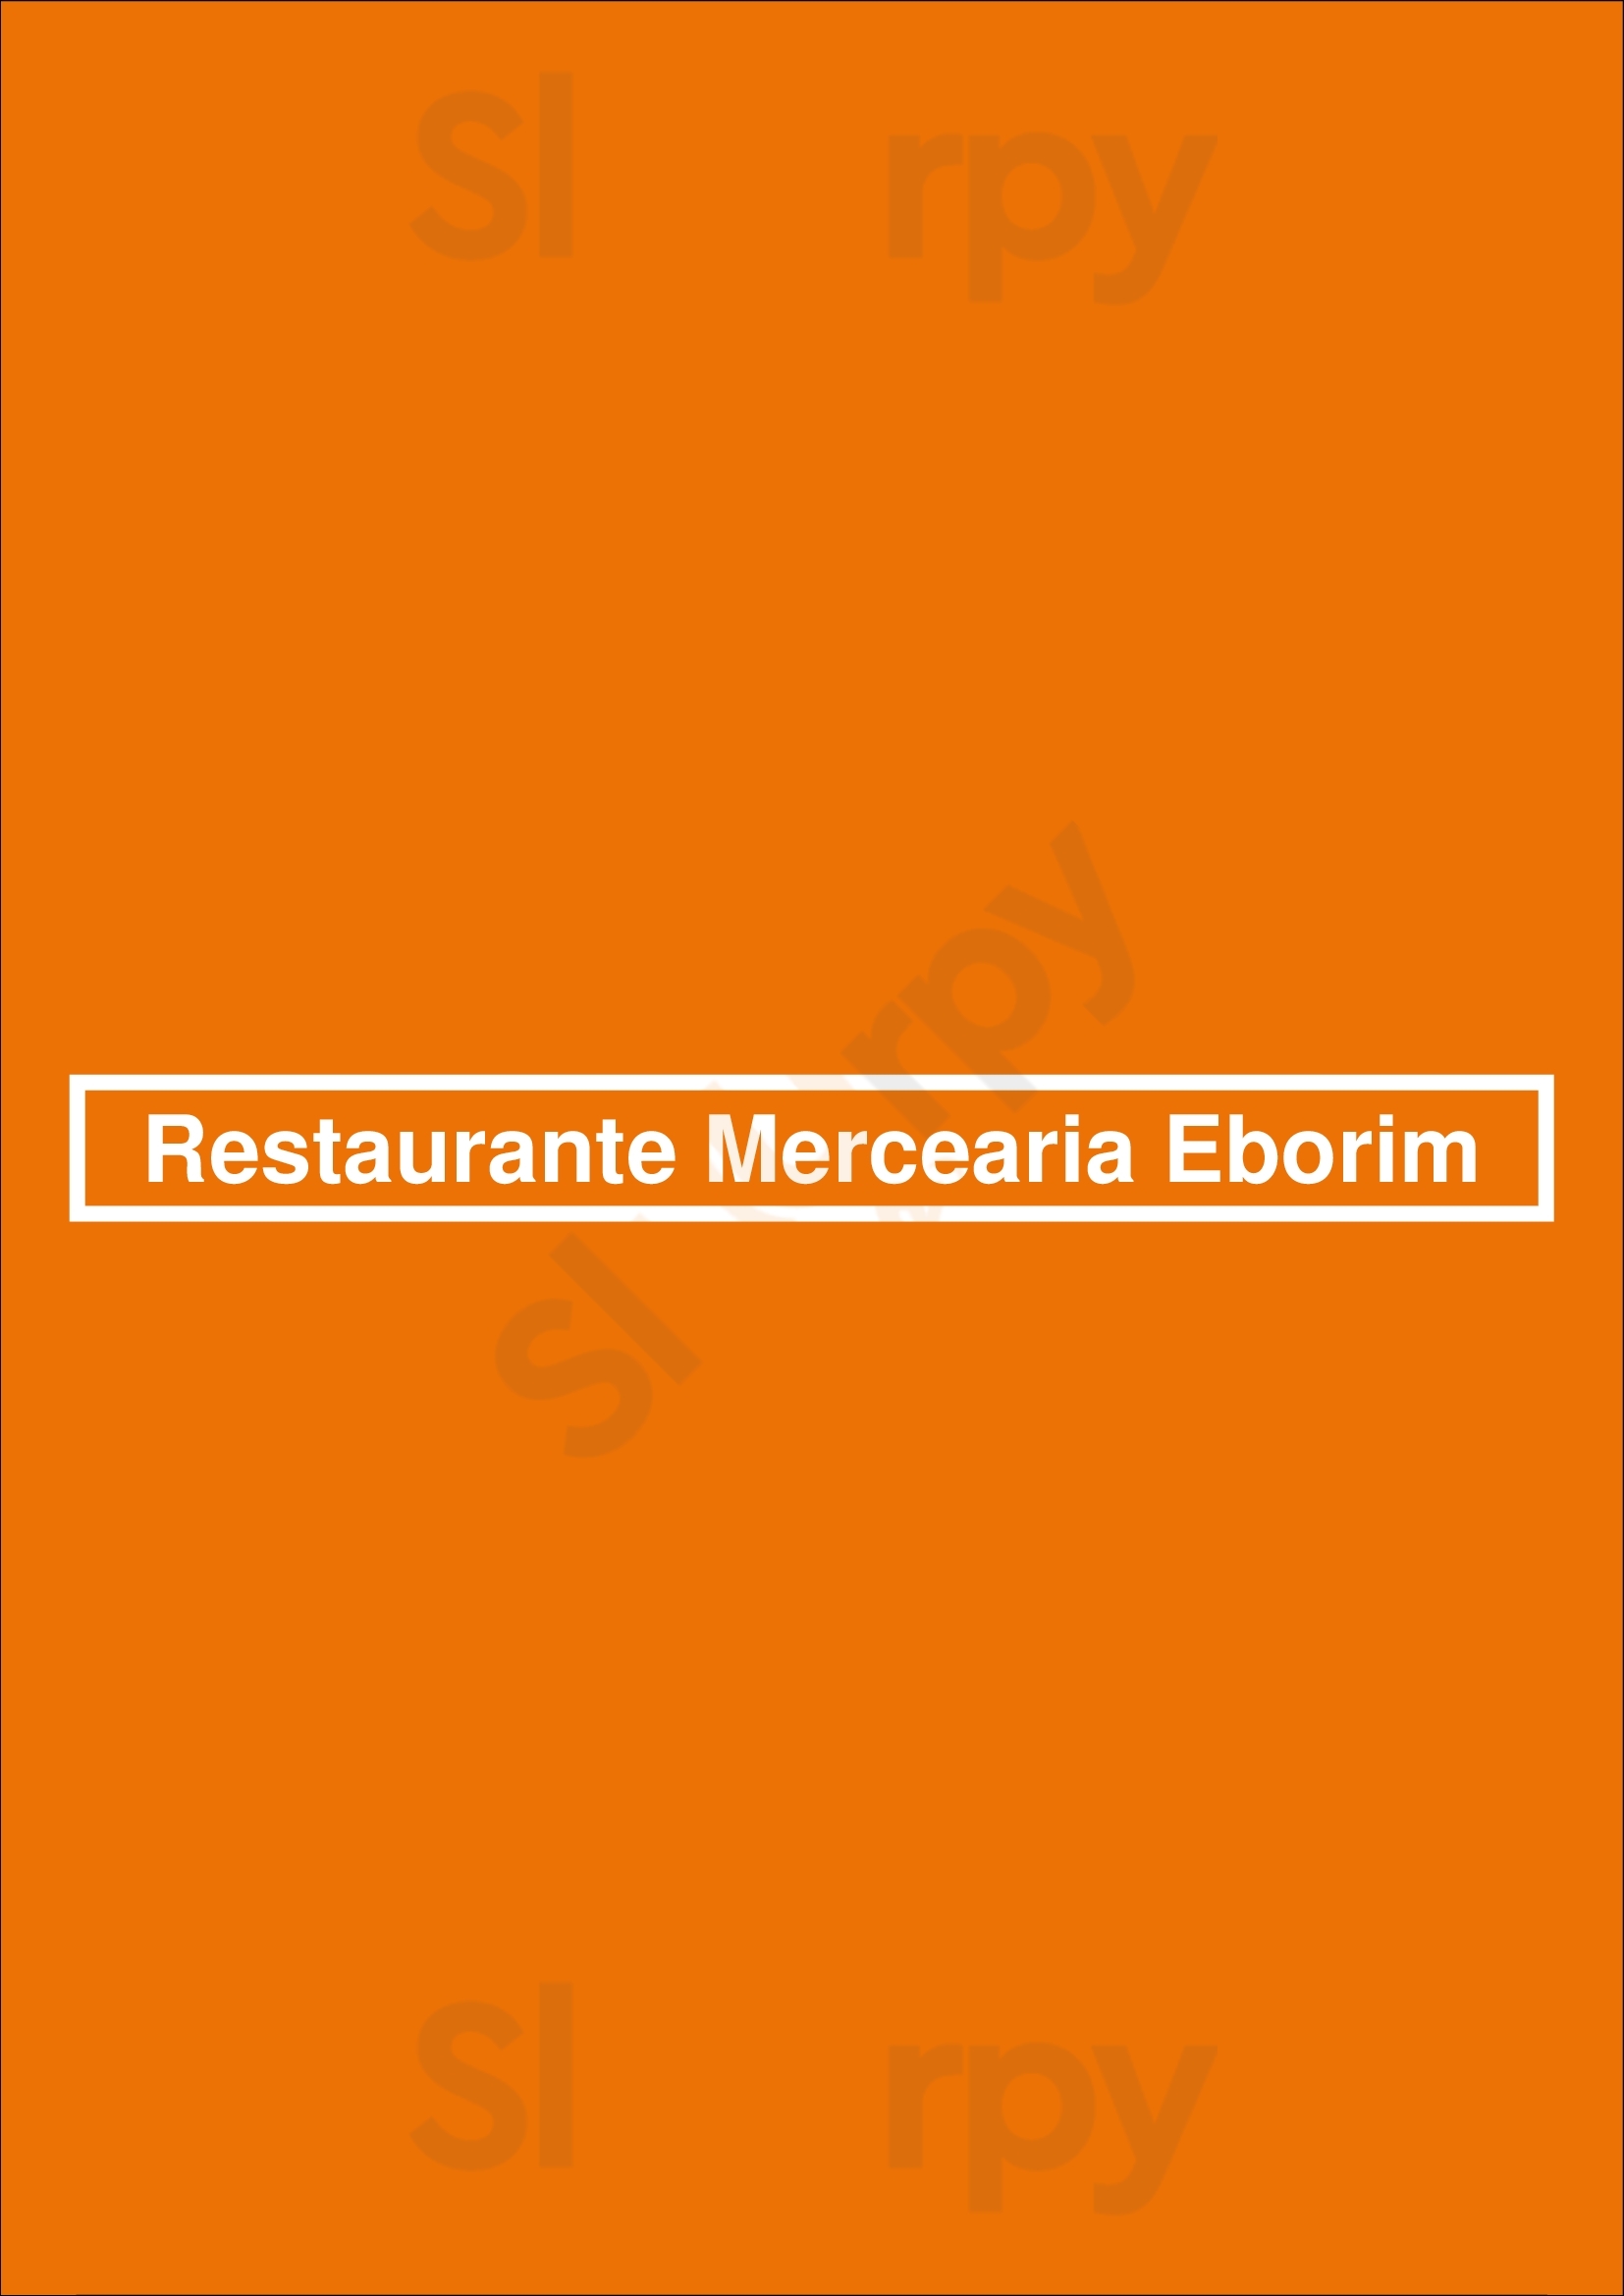 Restaurante Mercearia Eborim Évora Menu - 1